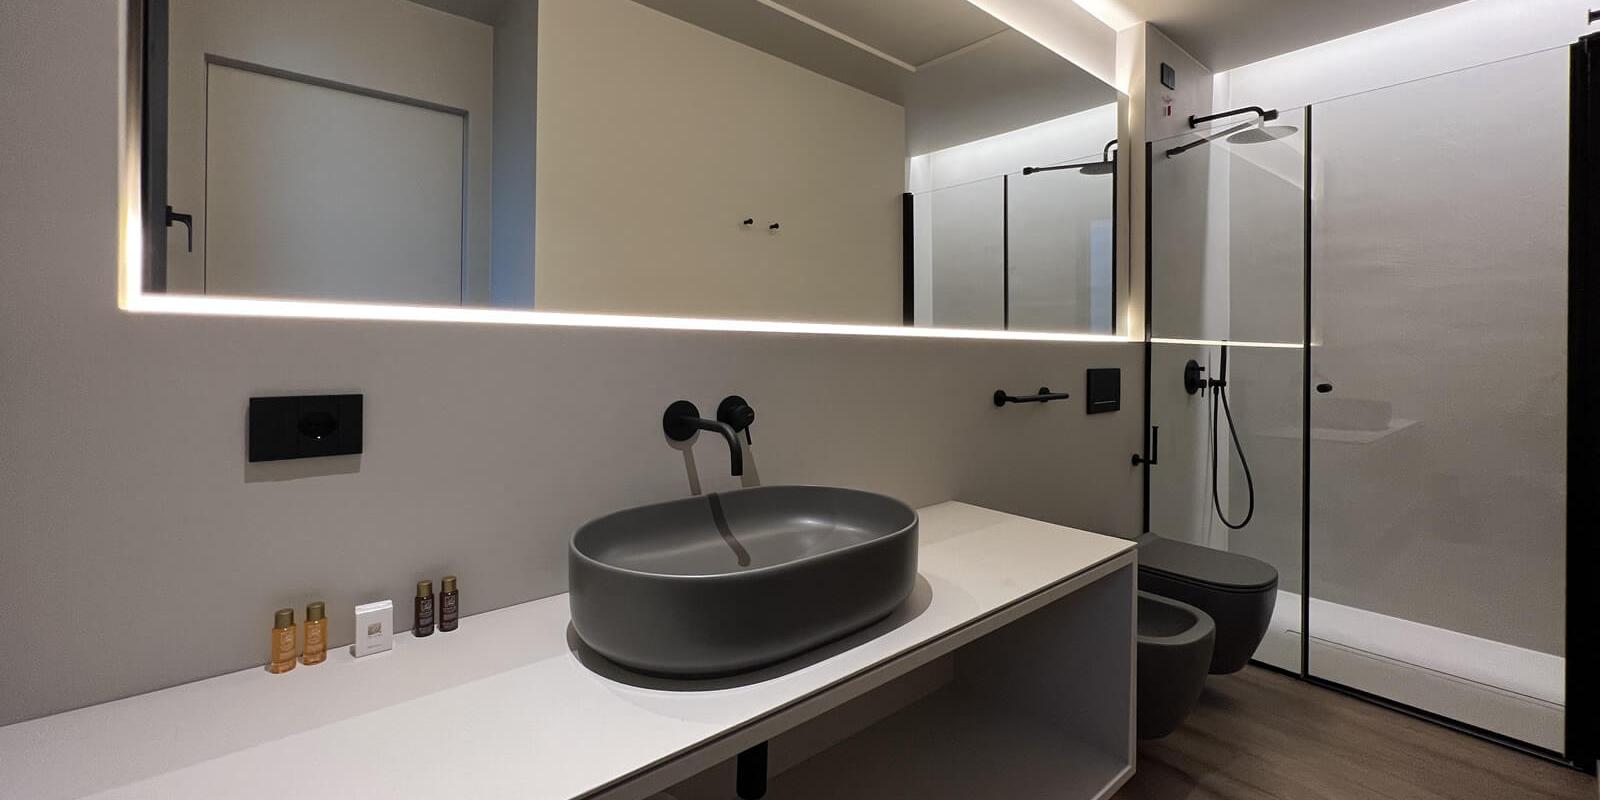 Modern bathroom with grey sink, glass shower, and backlit mirror.